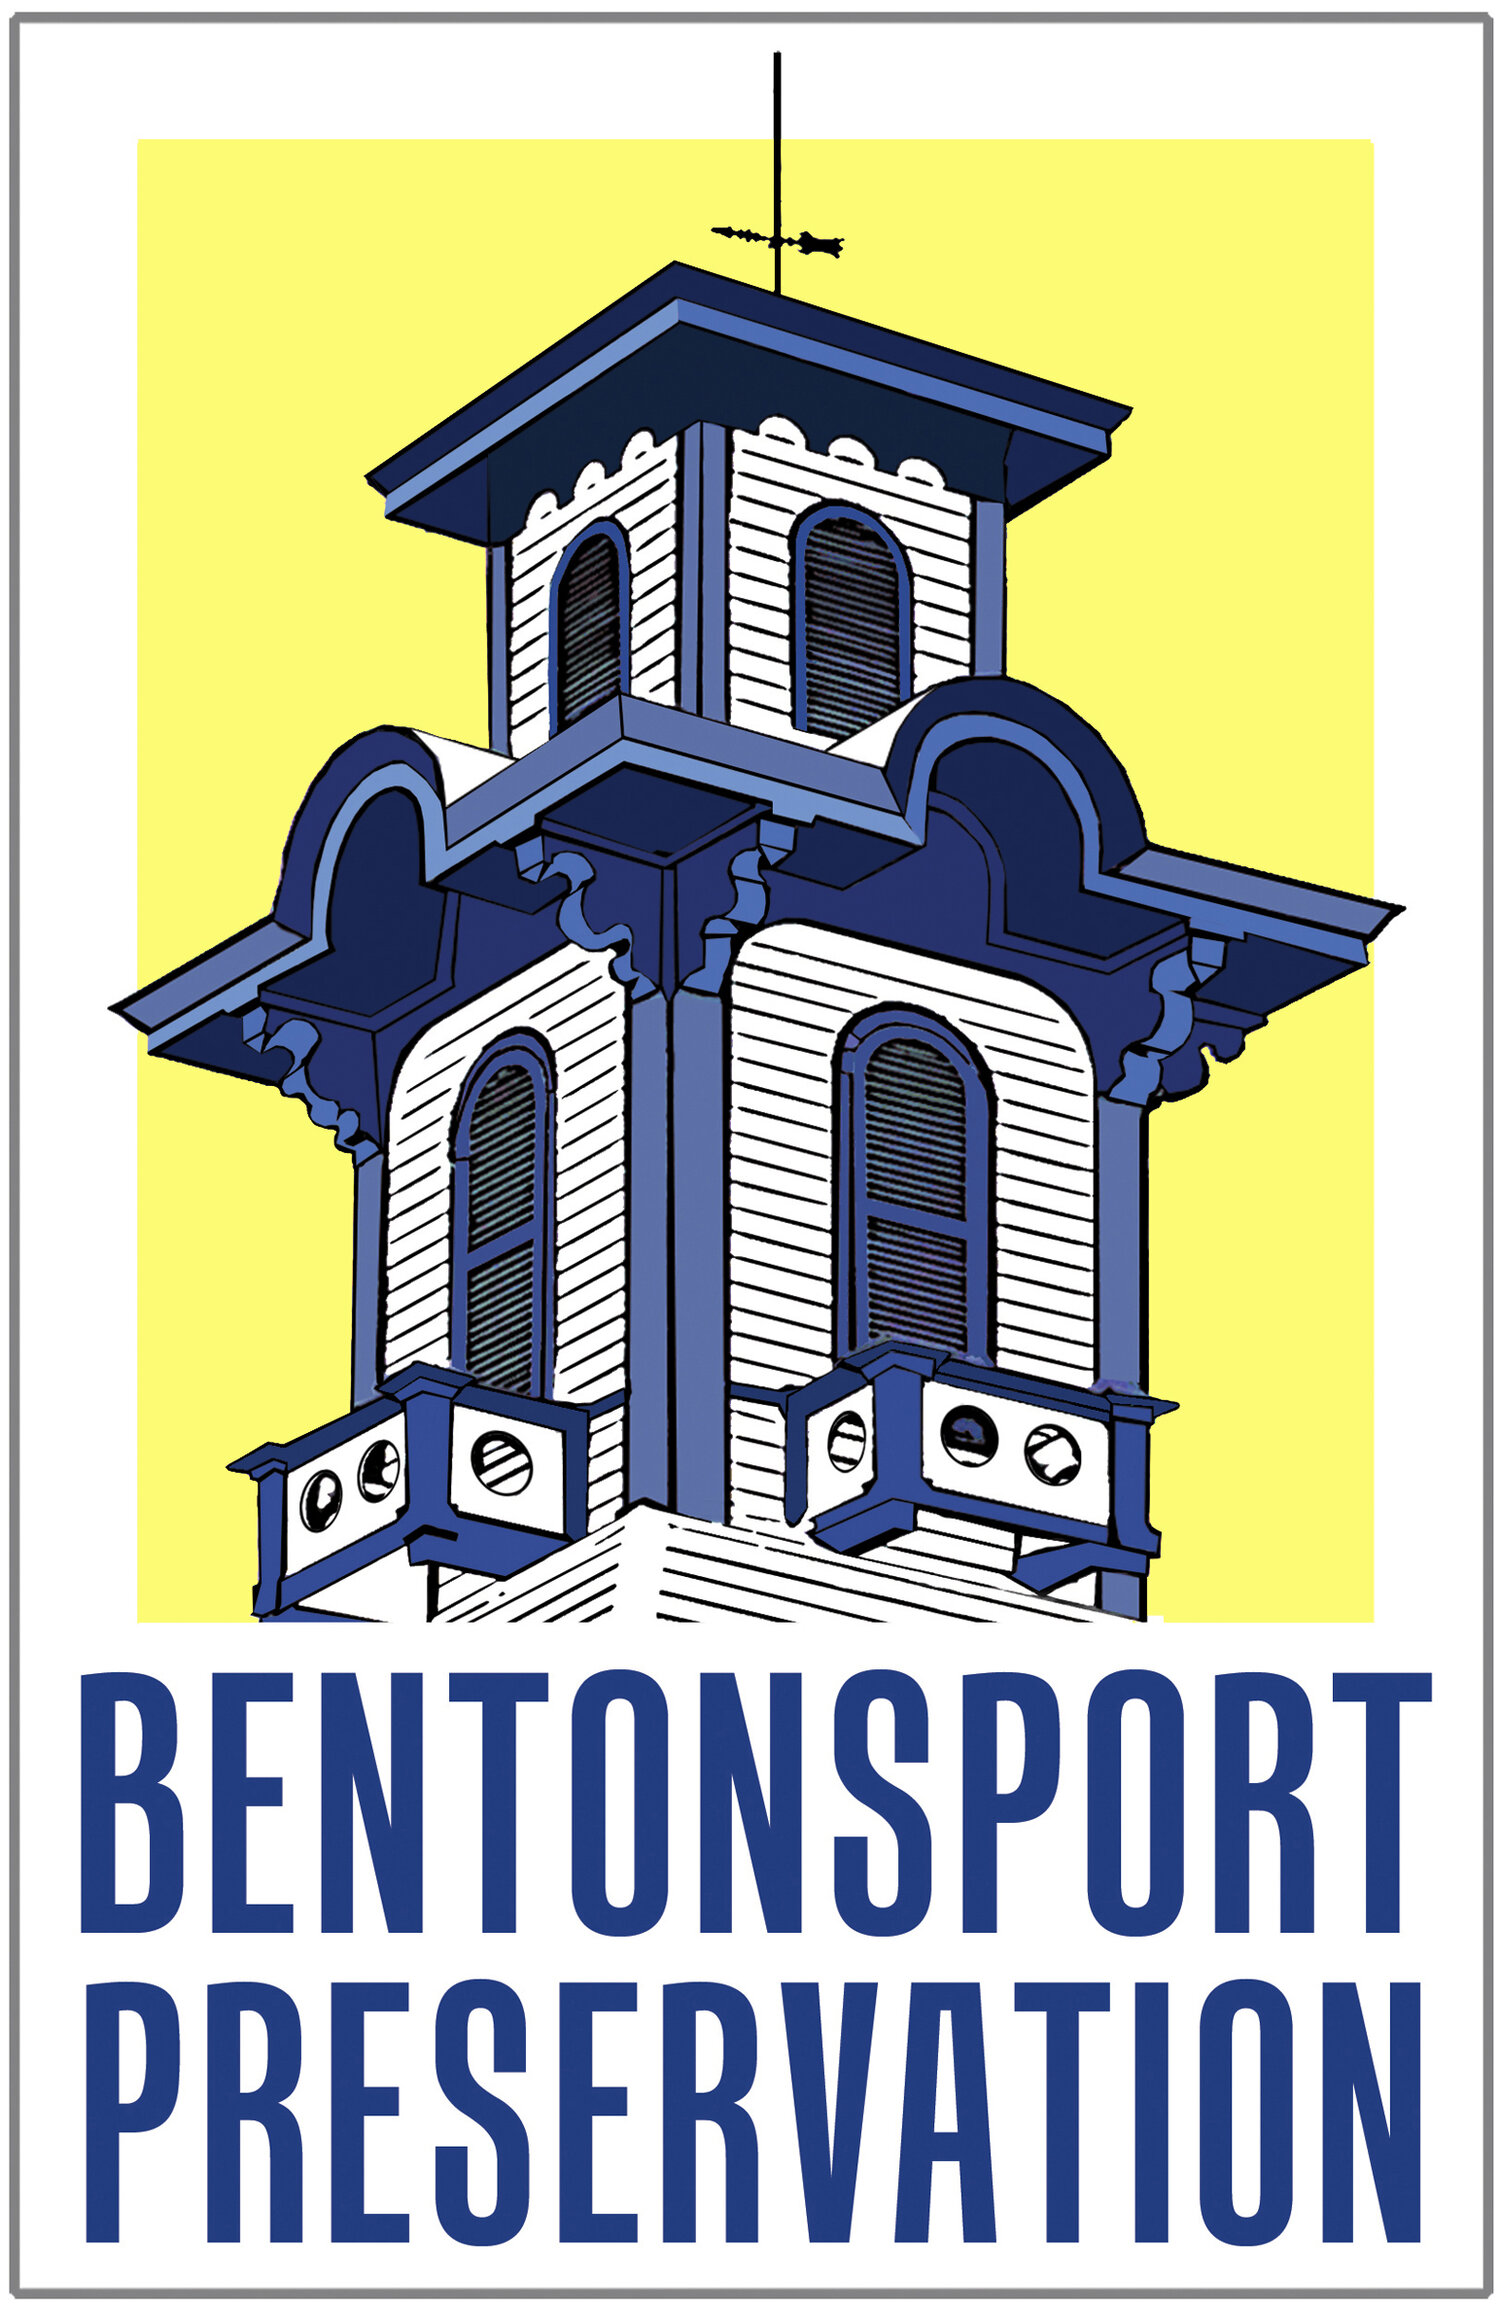 Bentonsport Preservation, LLC